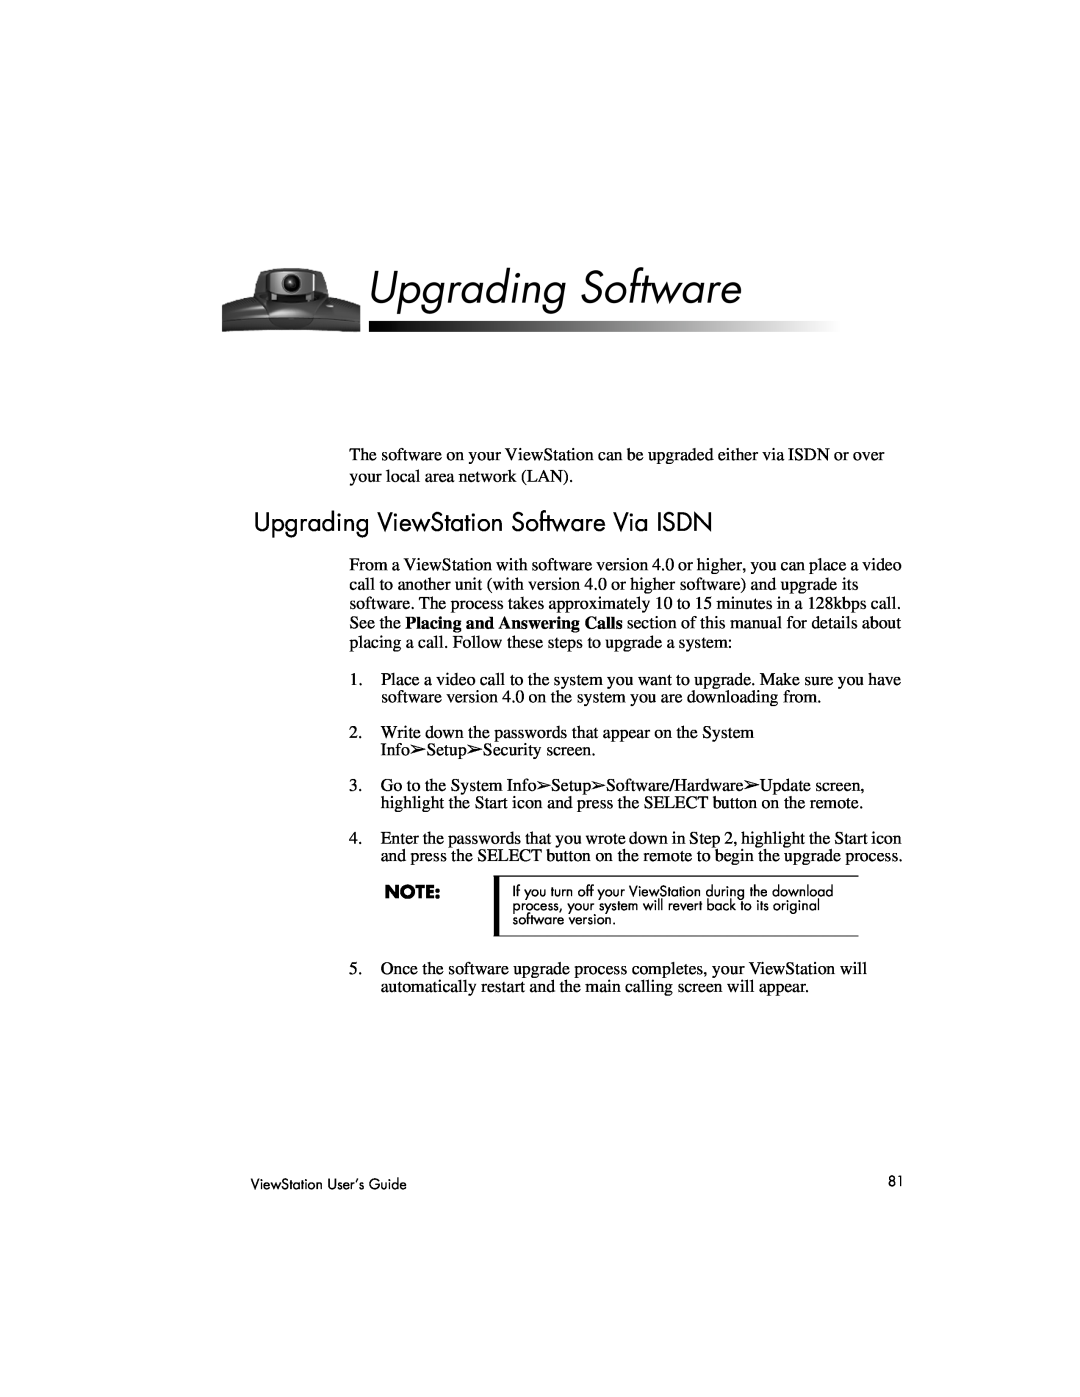 Polycom 128, 512, MP manual Upgrading Software, Upgrading ViewStation Software Via ISDN 